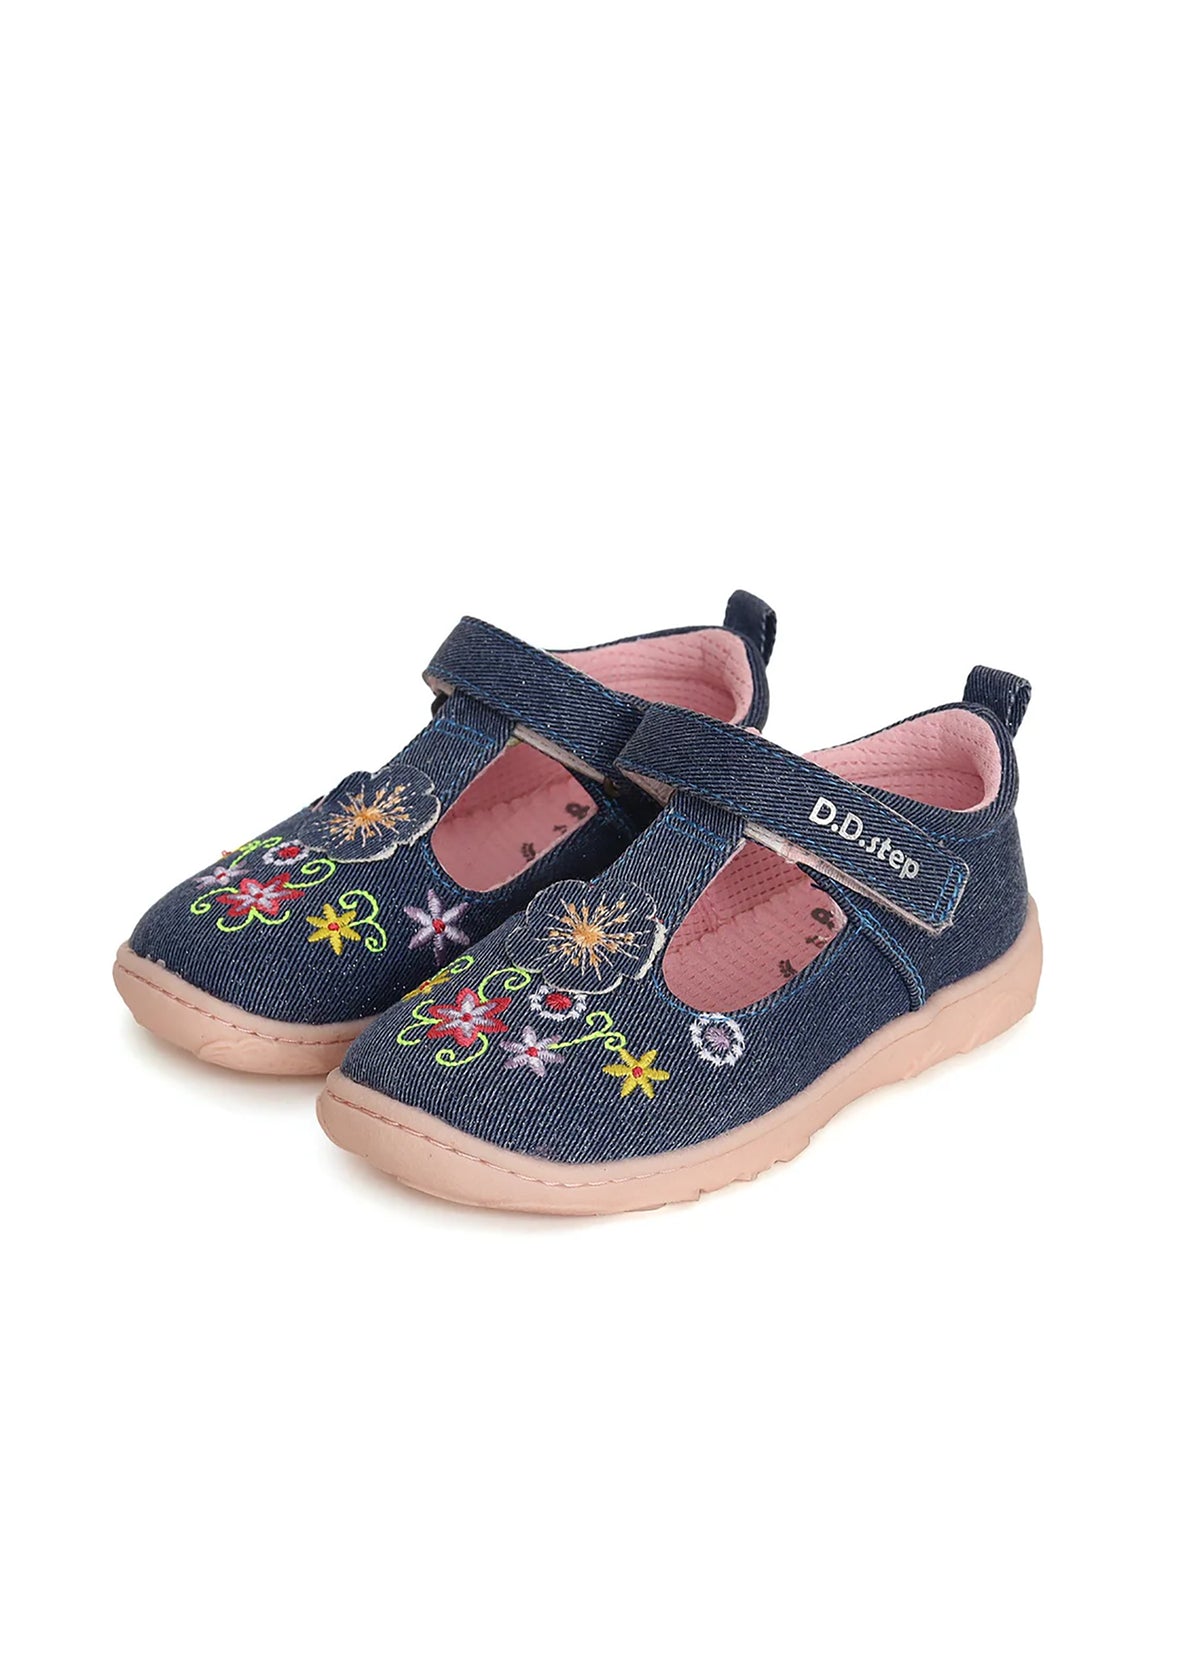 Children's barefoot sandals - blue canvas fabric, flowers